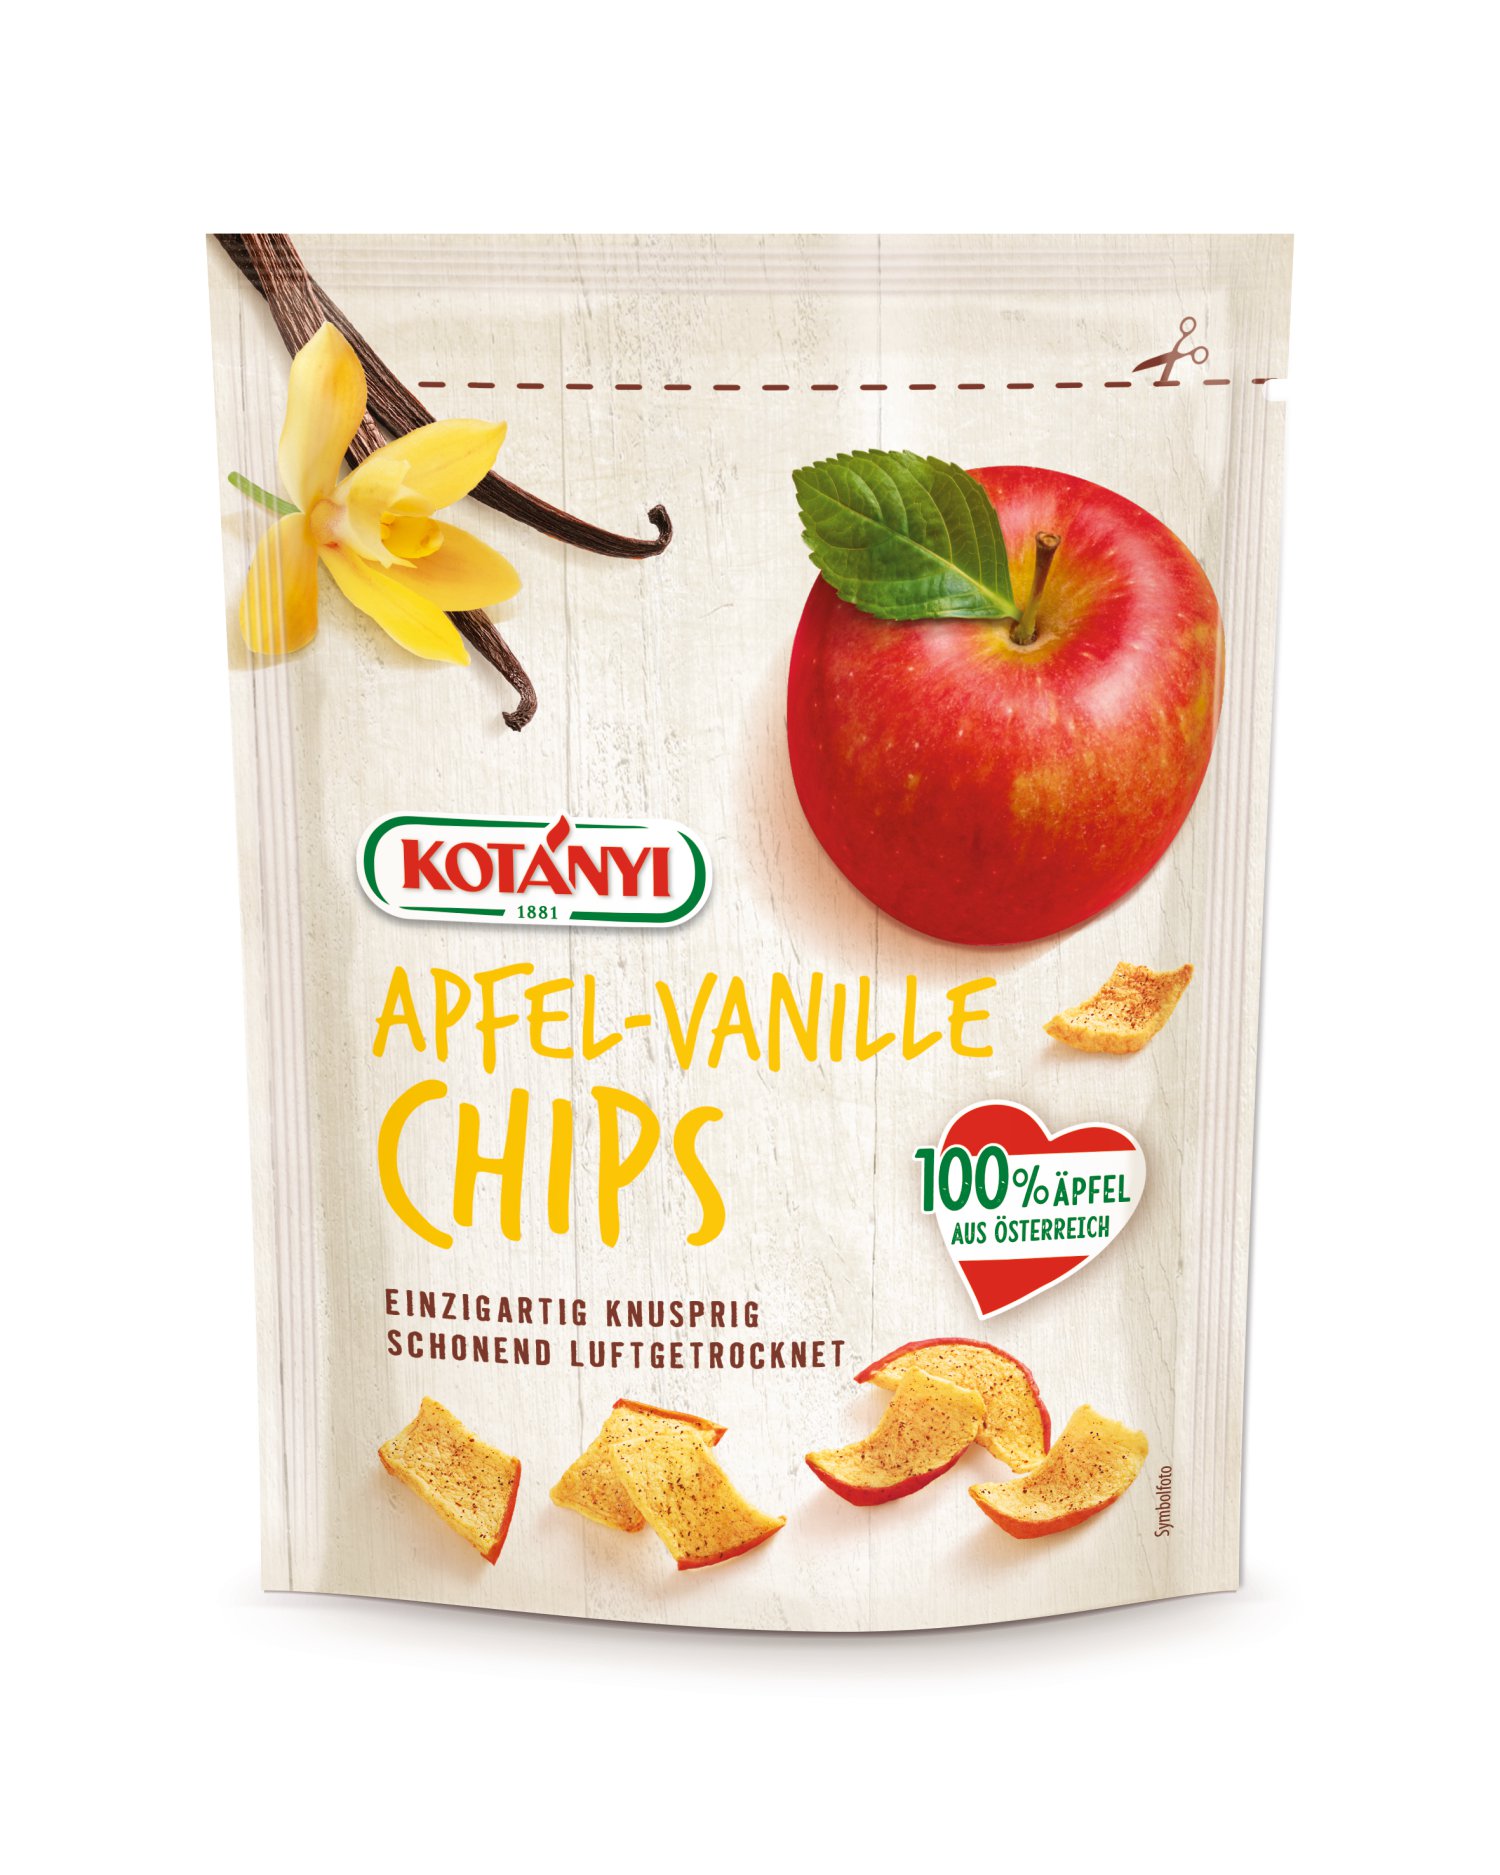 KOTANYI Apfel-Vanille Chips